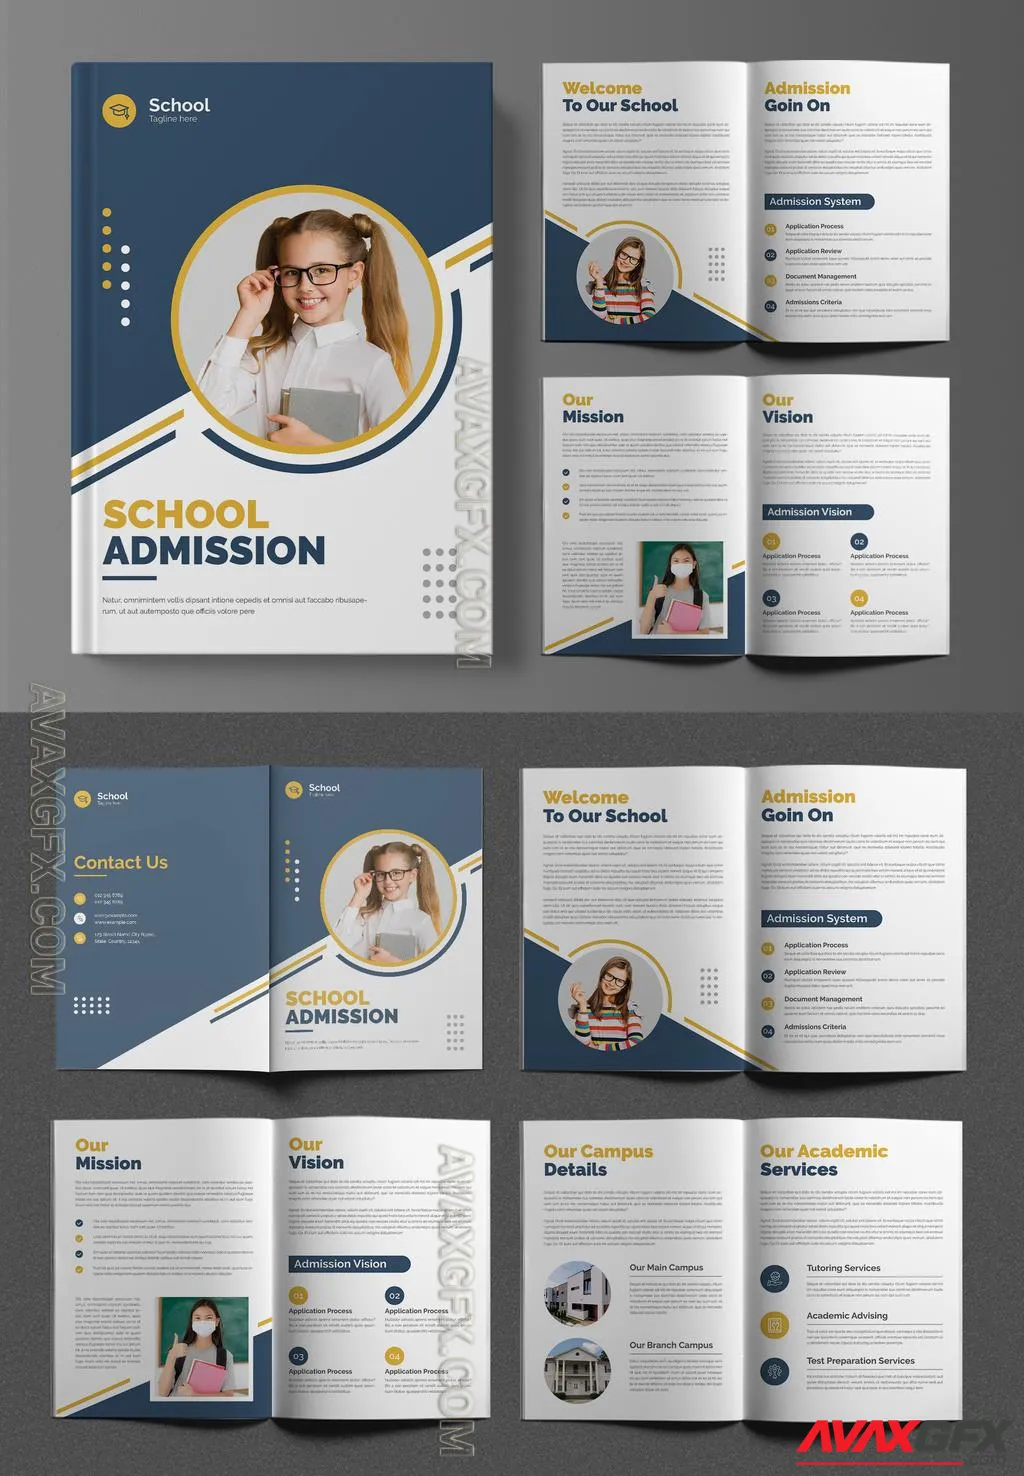 Adobestock - School Admission Brochure Design Template 675848058